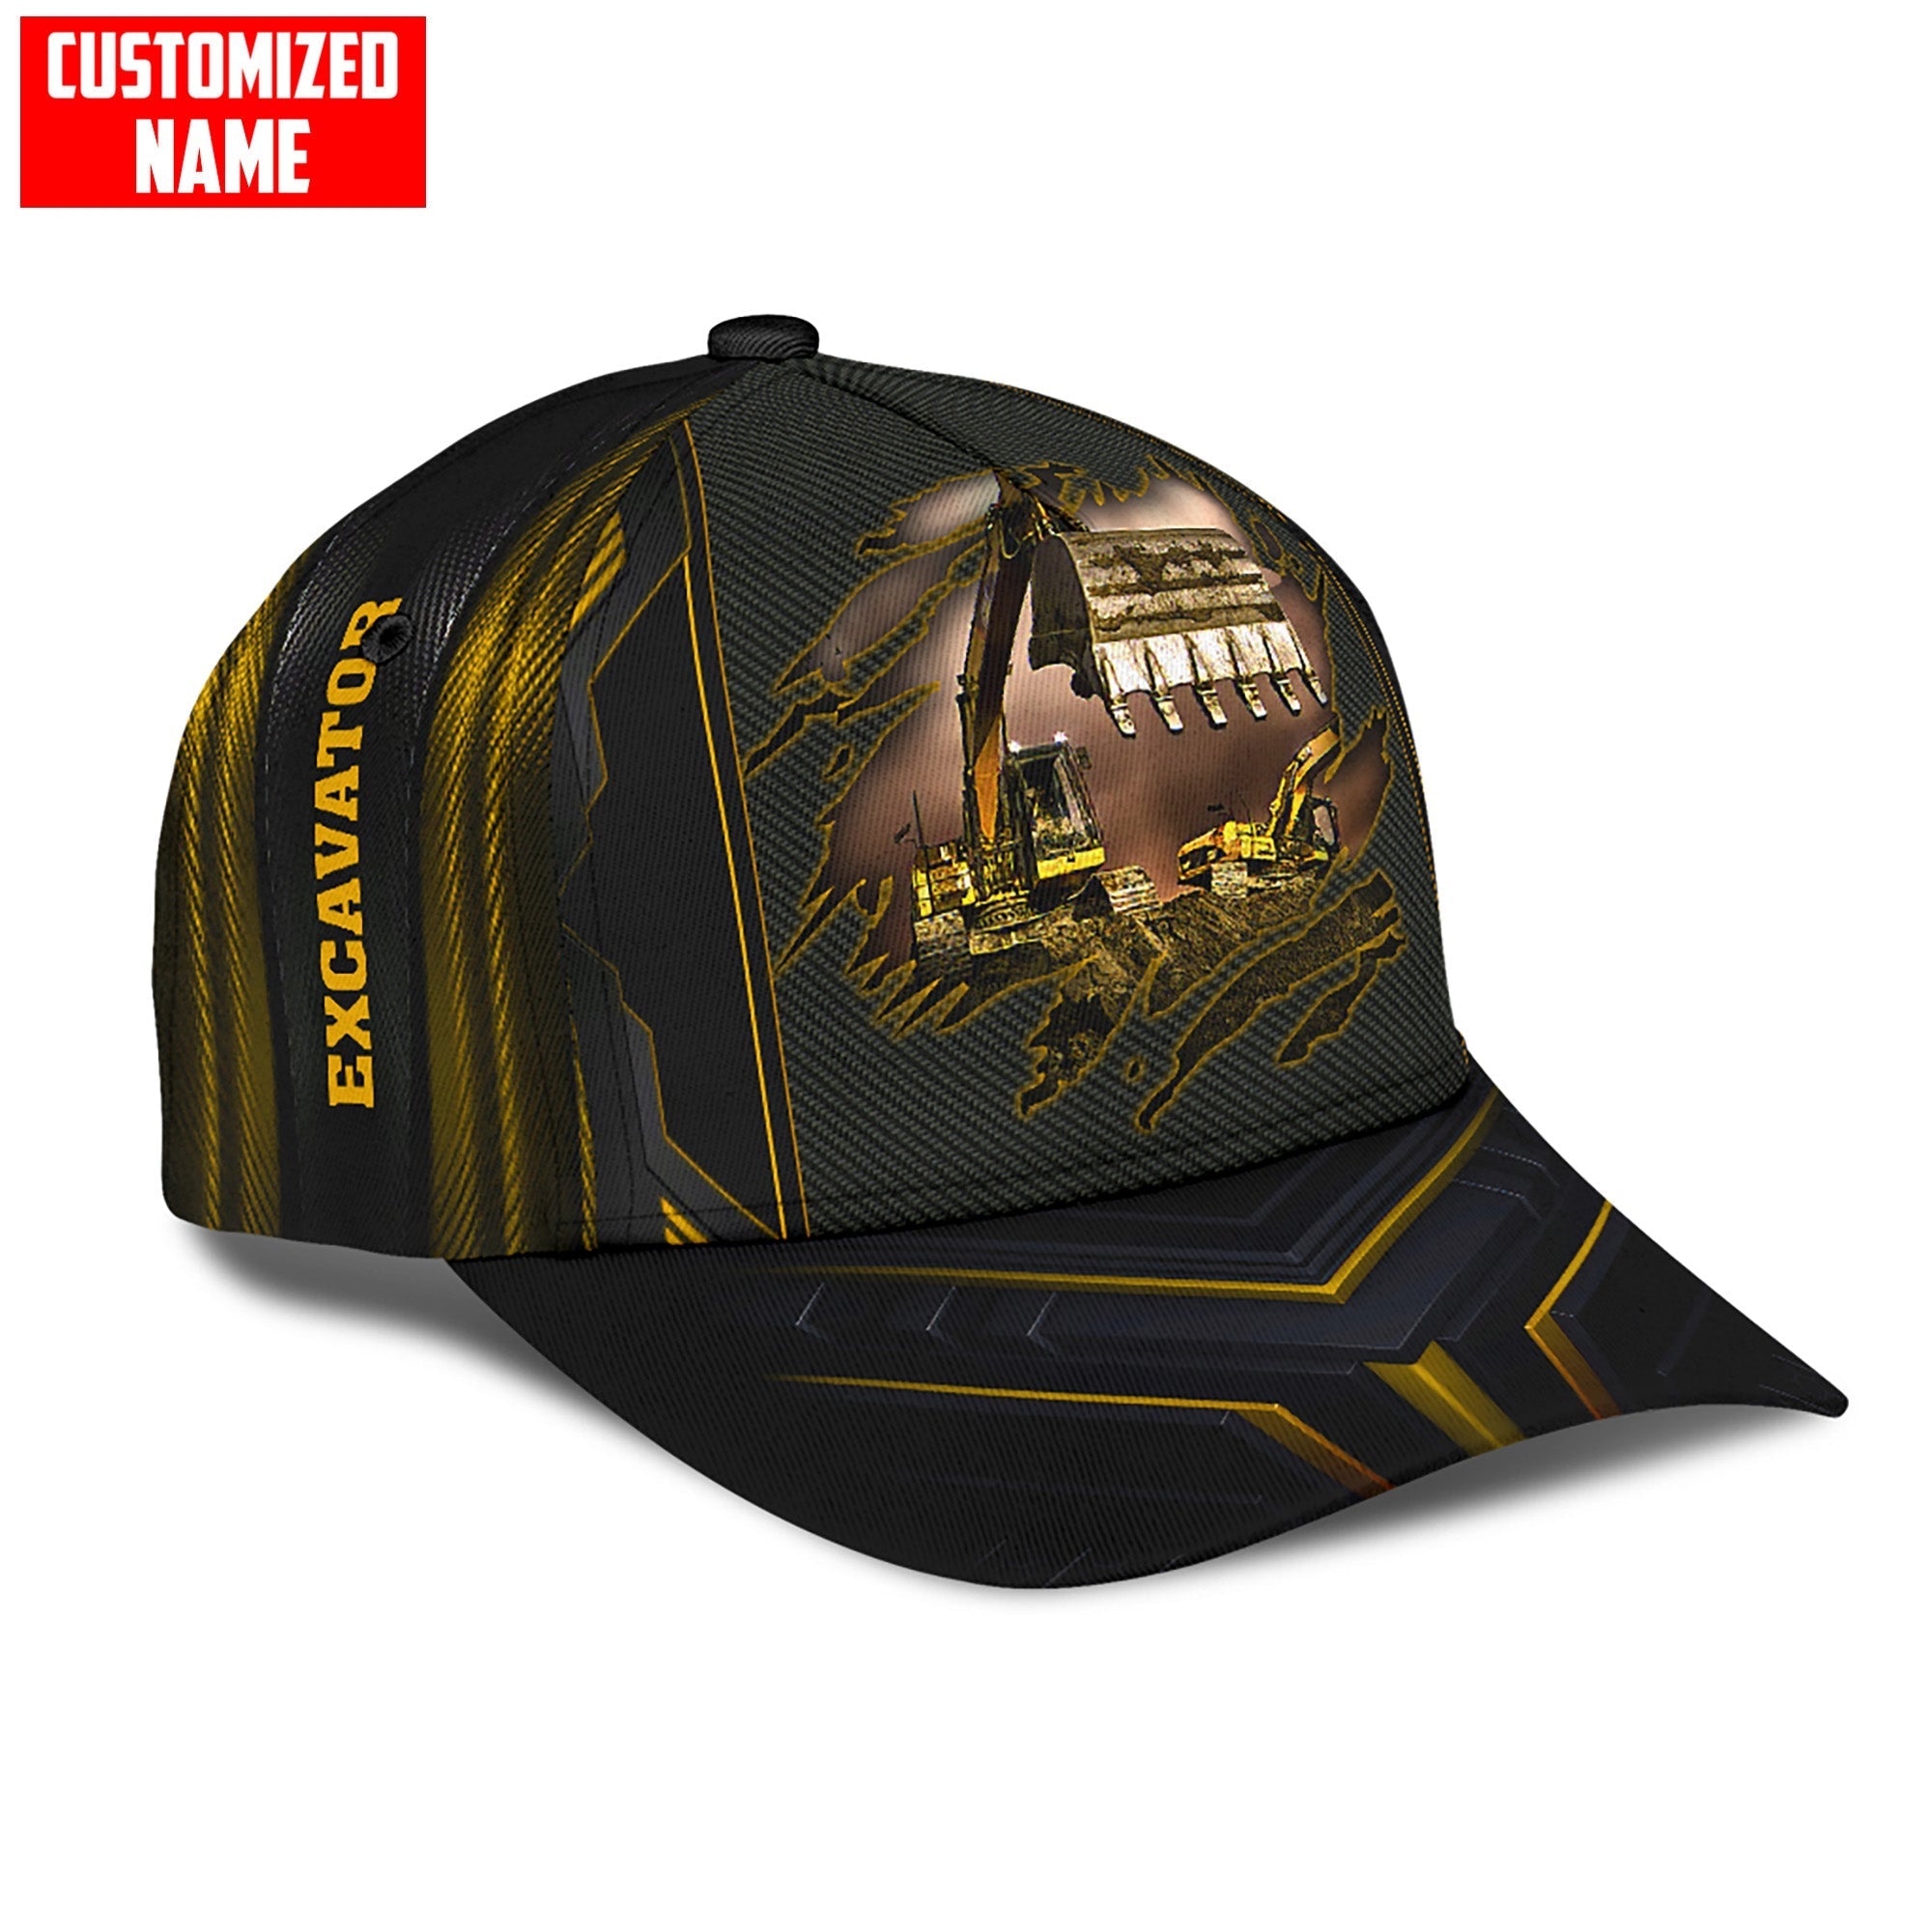 Personalized With Name Excavator 3D Full Printing Classic Cap Hat/ Excavator Baseball Cap Hat